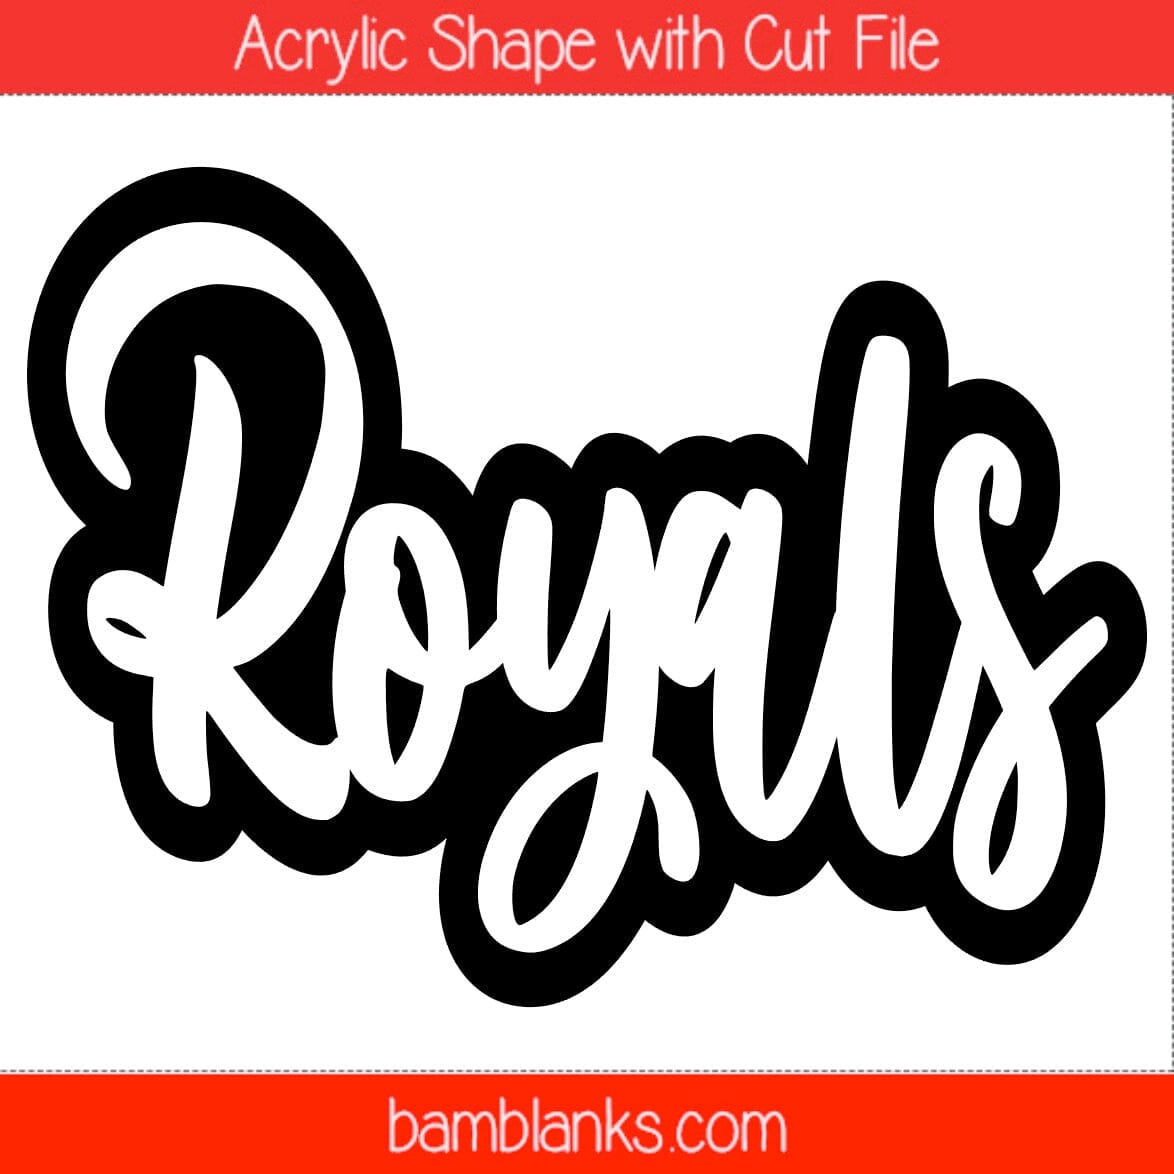 Royals - Acrylic Shape #1539